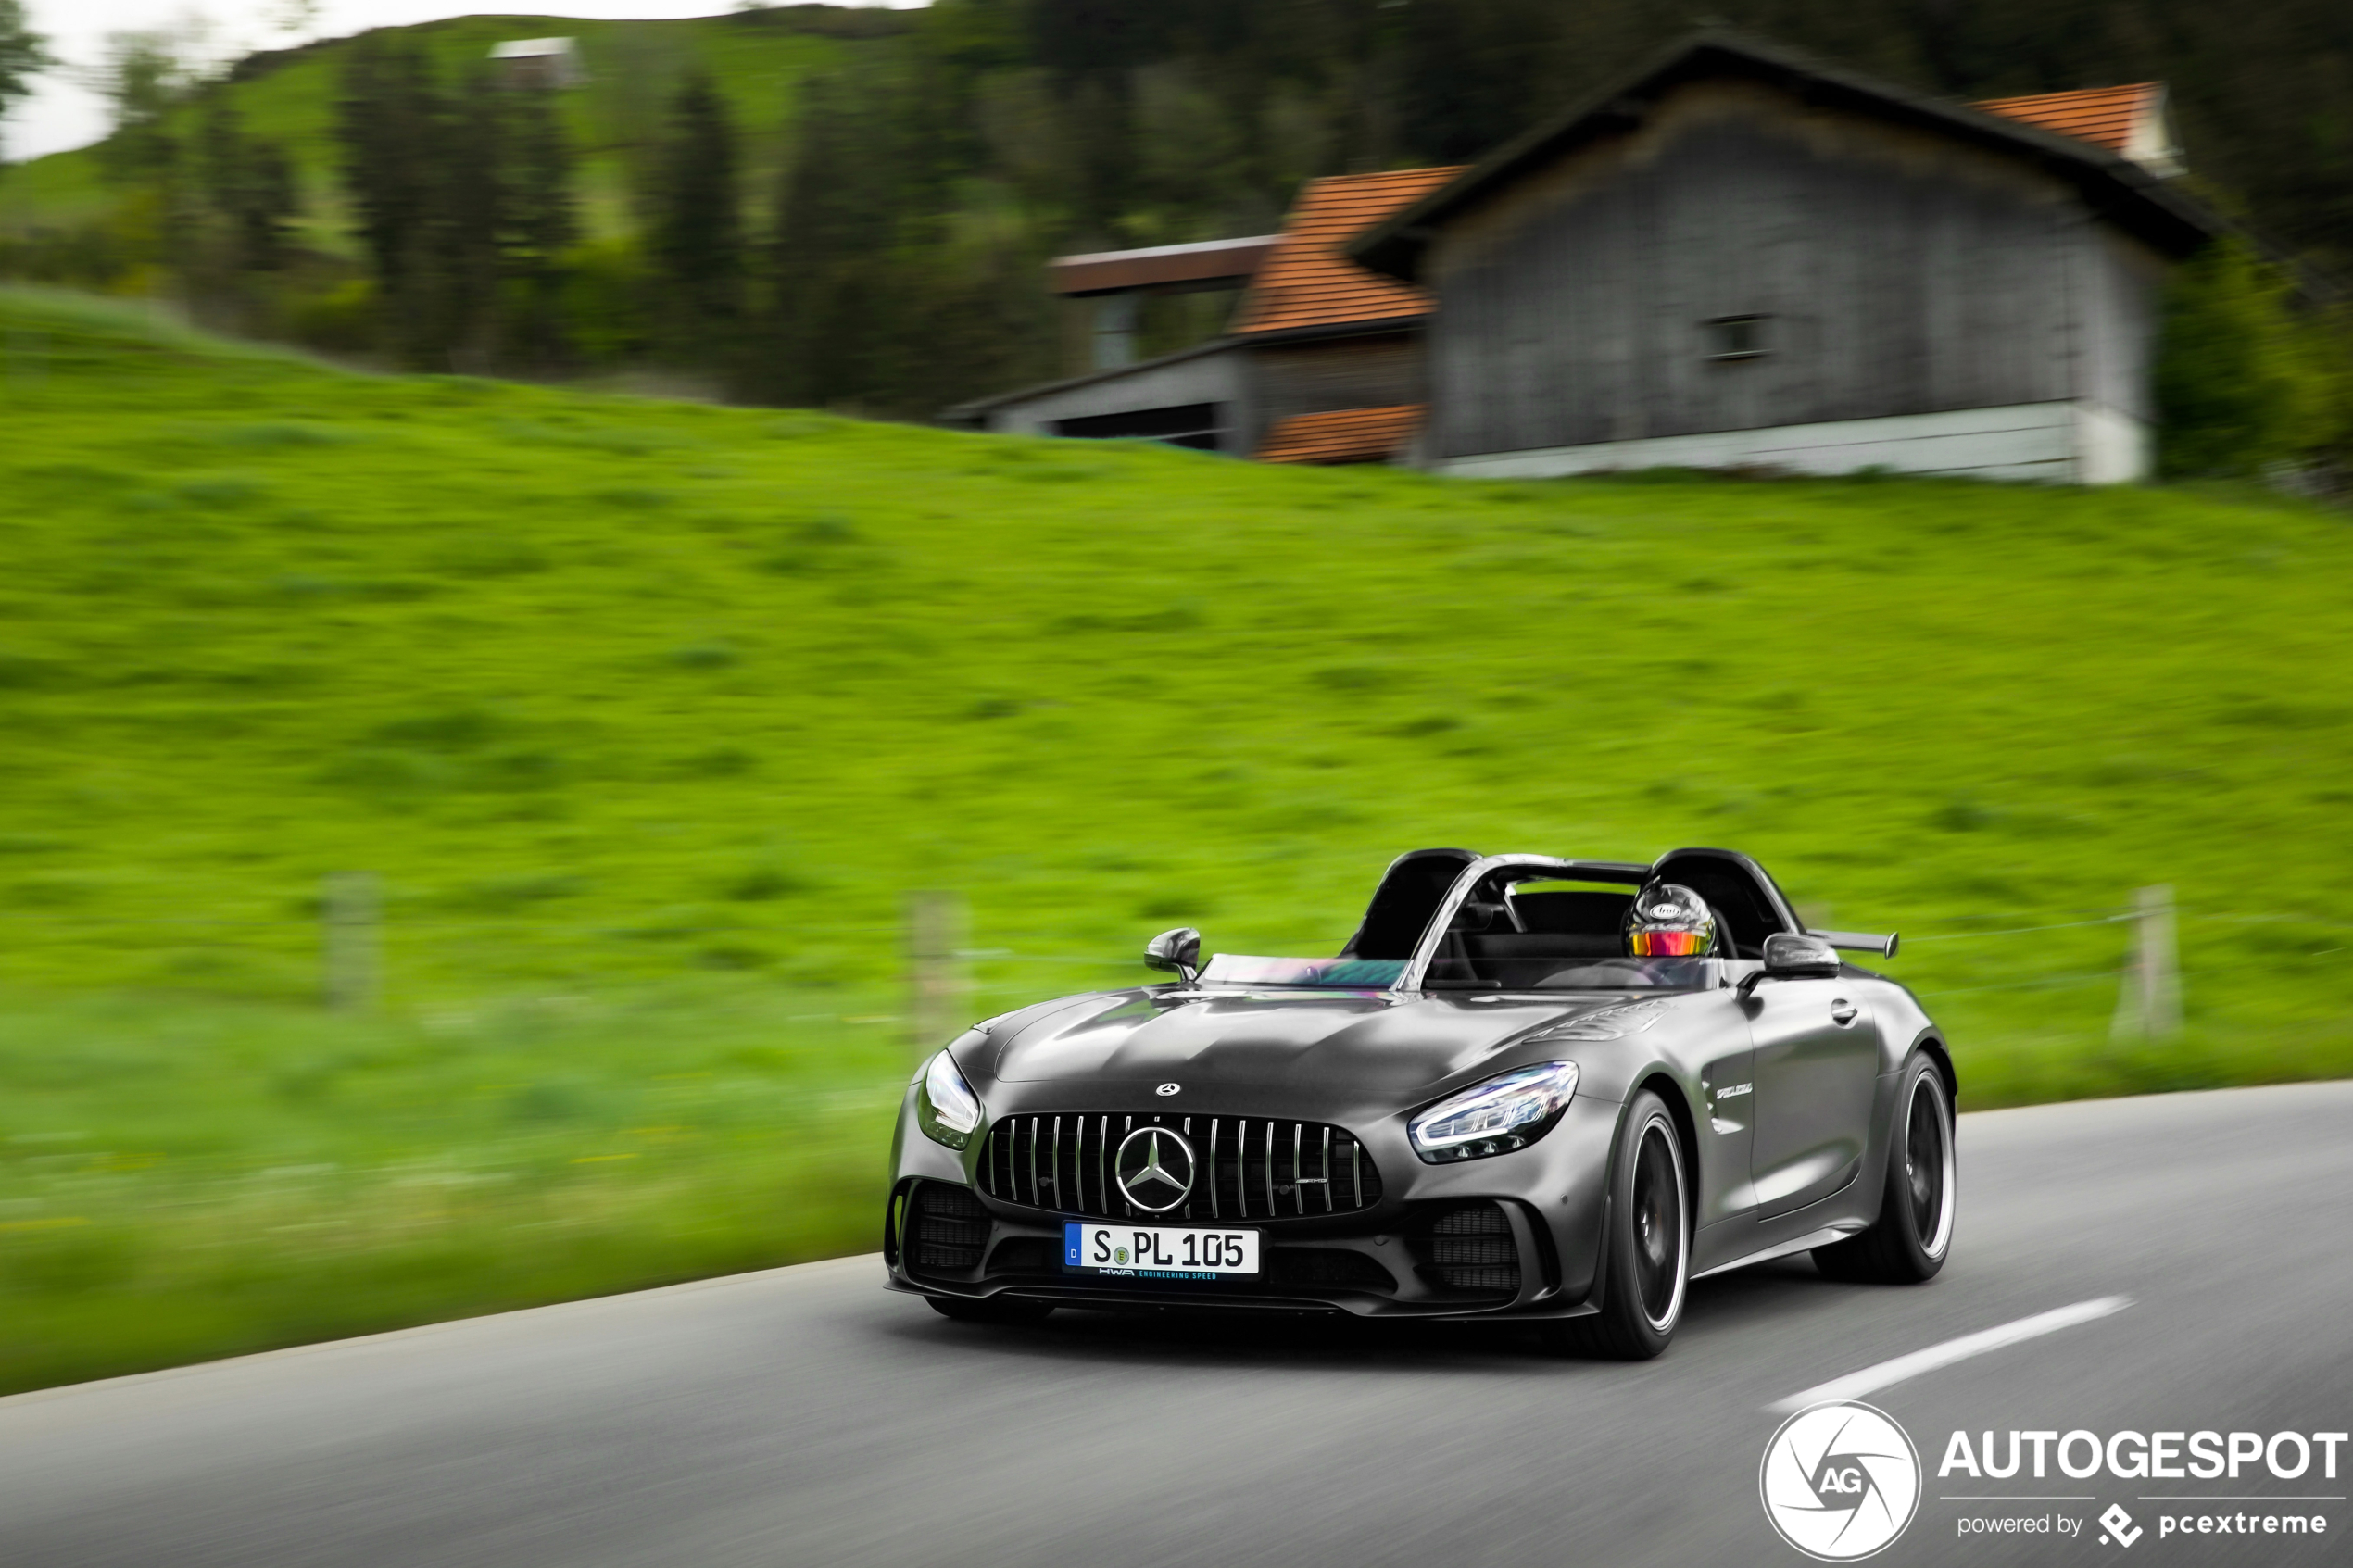 Mercedes-AMG GT R Speedlegend is modern interpretation of SLR Stirling Moss